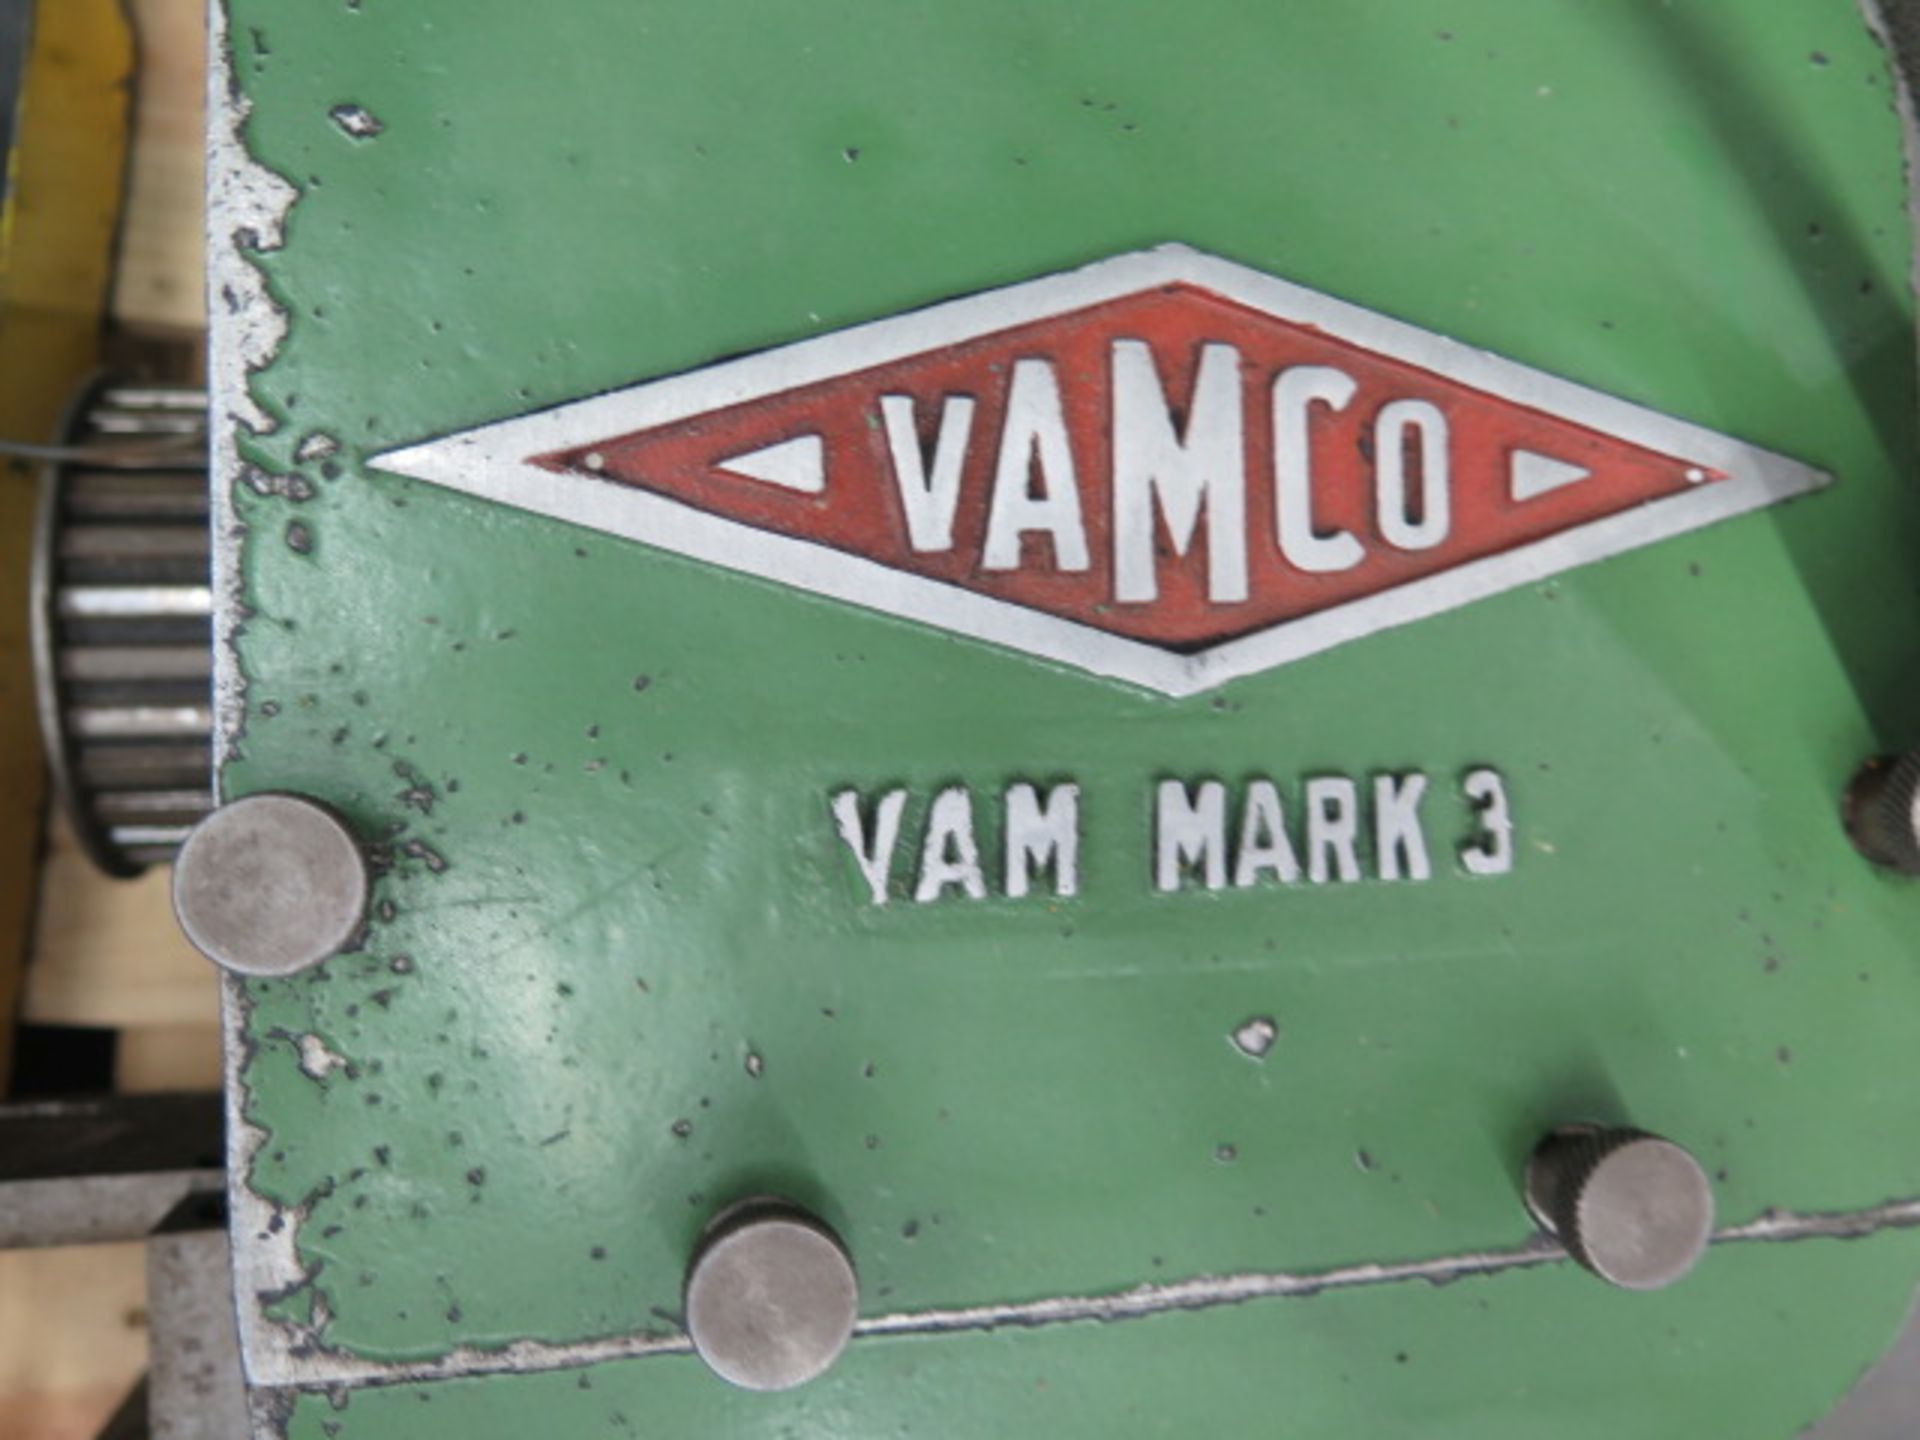 Vamco "VAM MARK 3" Pneumatic Drive - Image 4 of 4